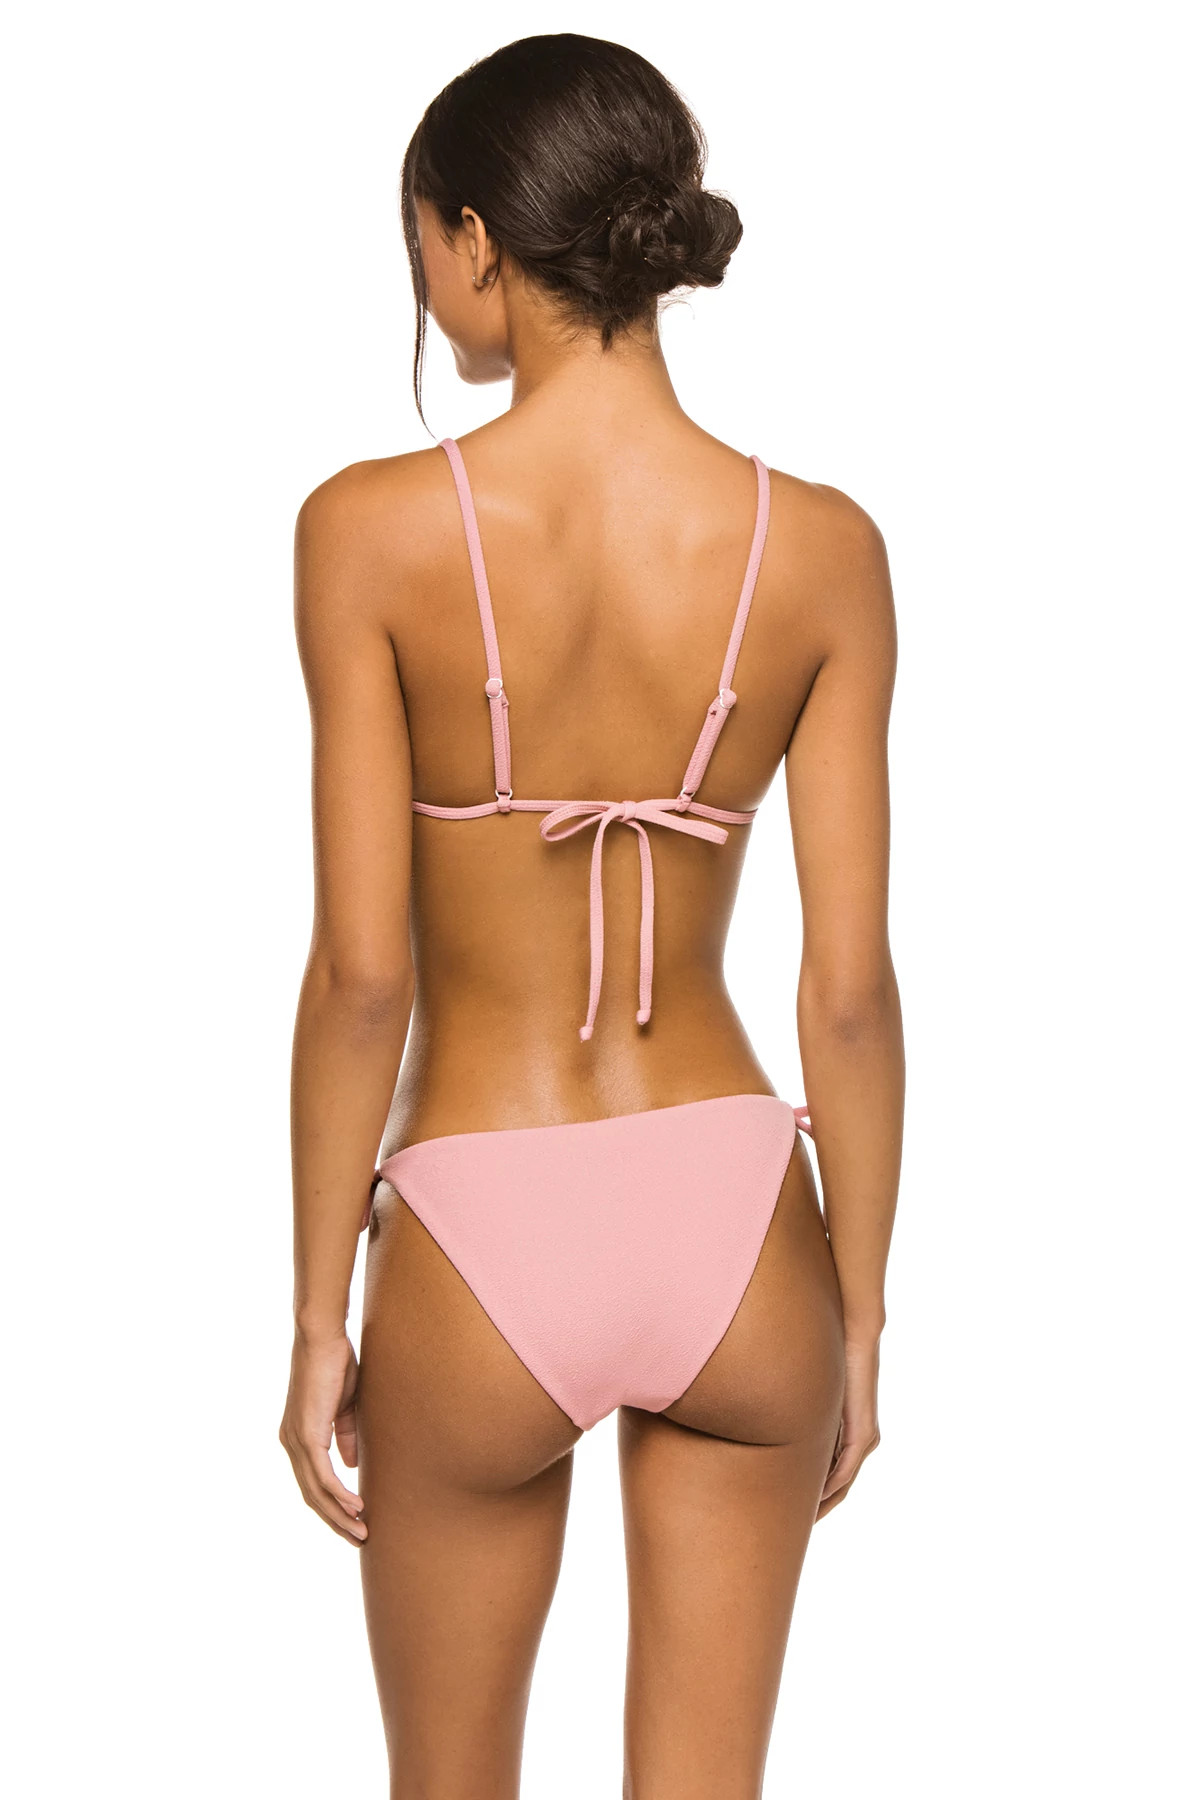 MAUVEGLOW Remi Triangle Bikini Top image number 2